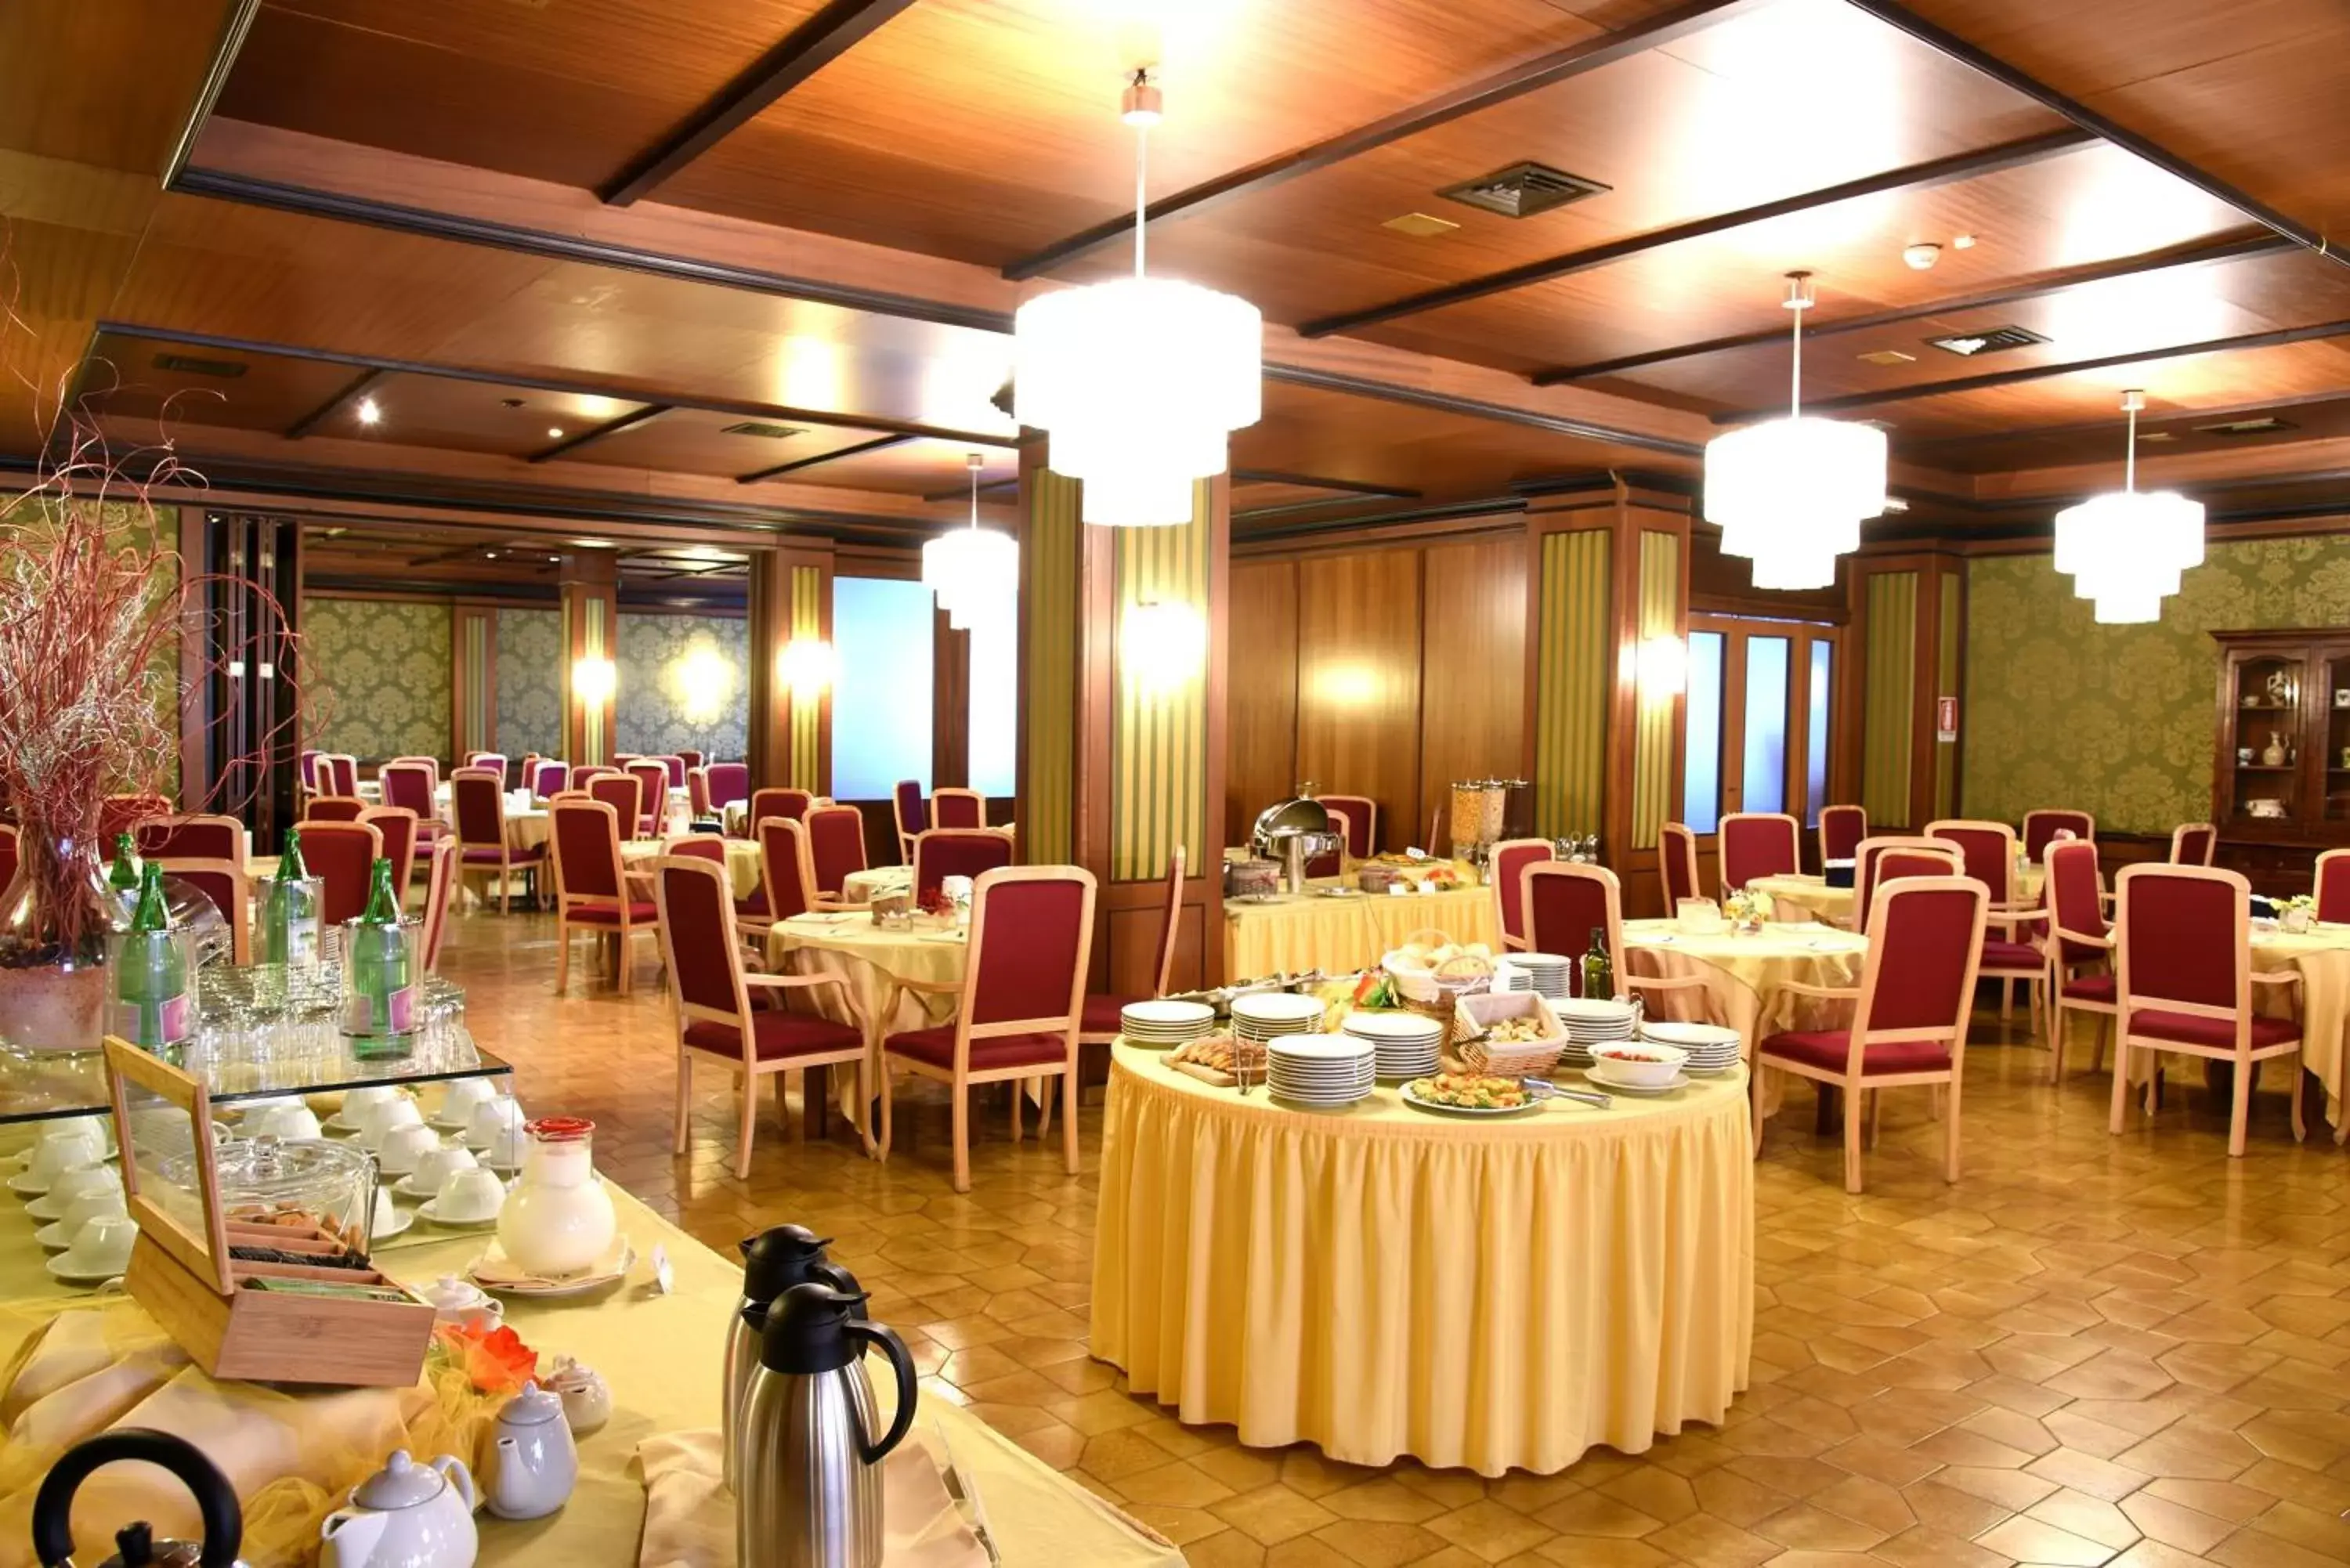 Buffet breakfast, Banquet Facilities in Hotel Delle Palme